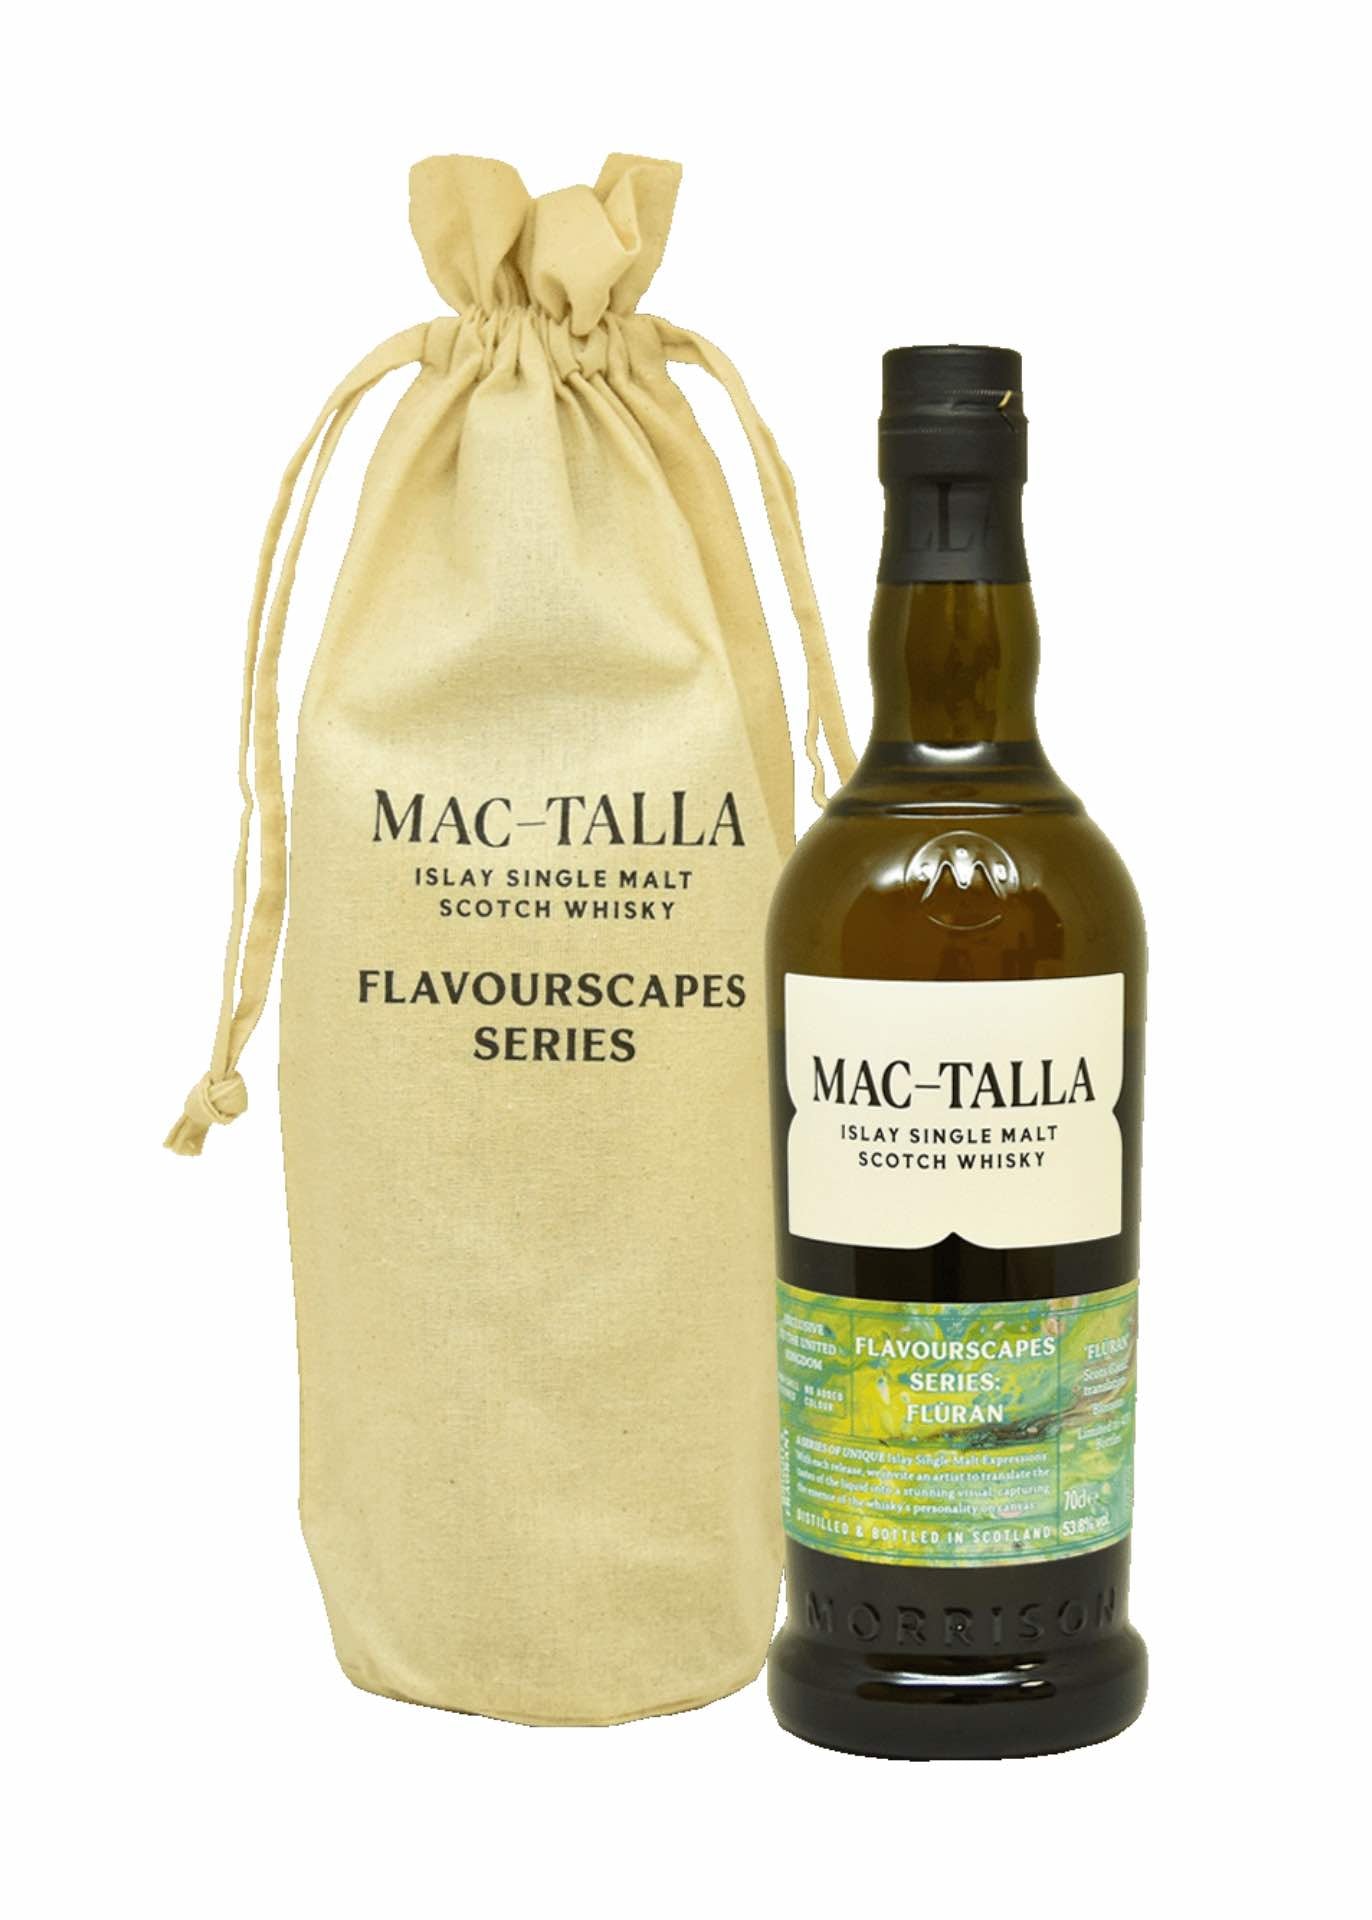 Mac-Talla Flavourscapes Series: Fluran